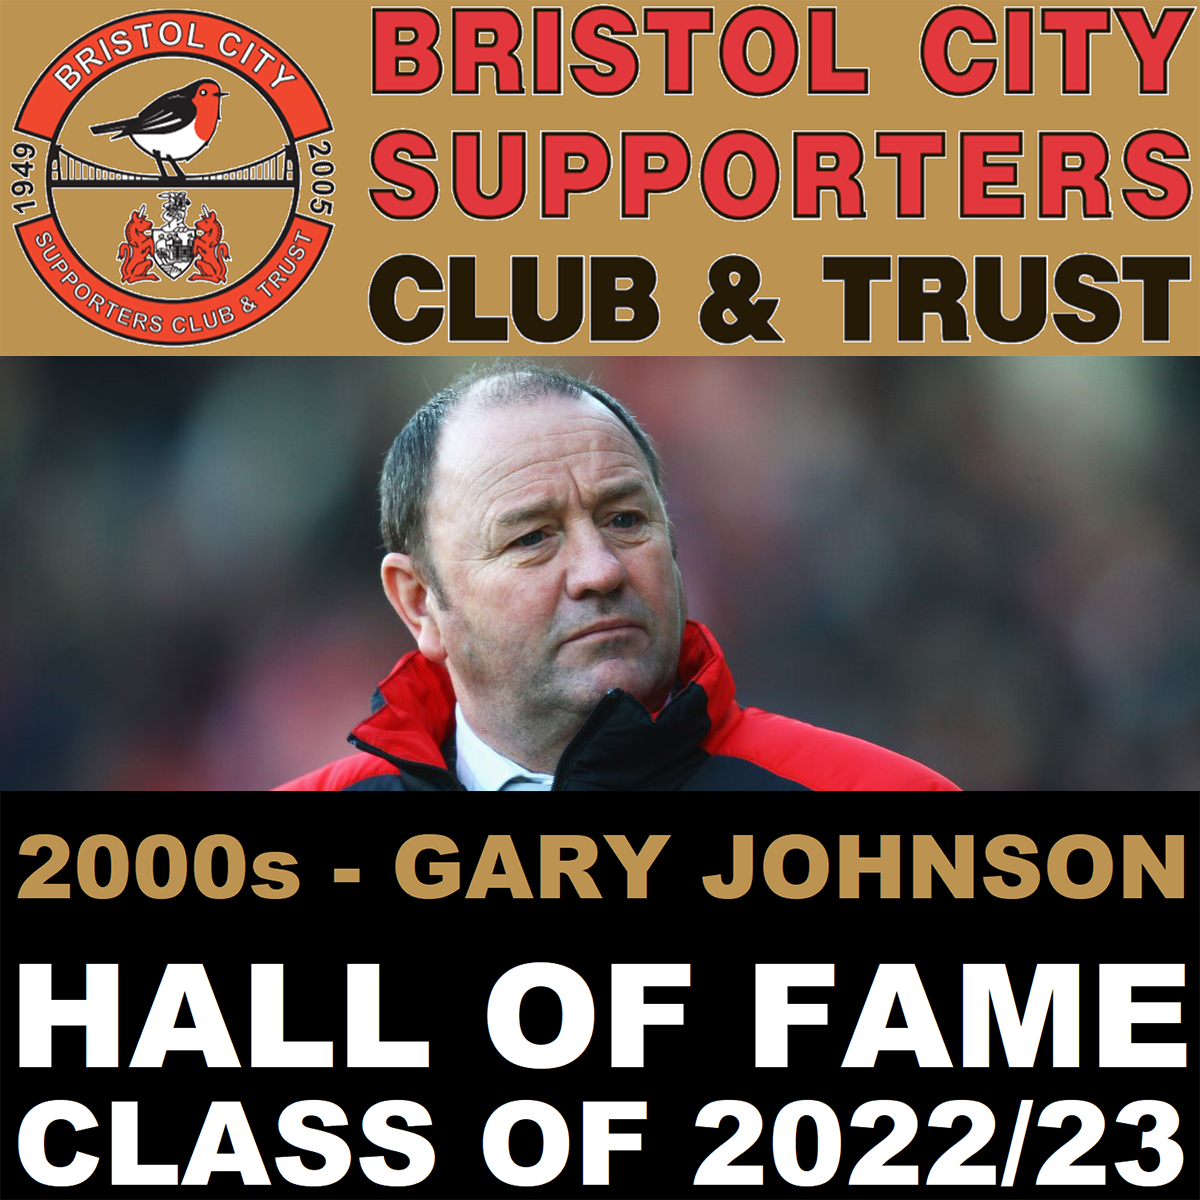 Hall-of-Fame-2022-23-Gary-Johnson.png